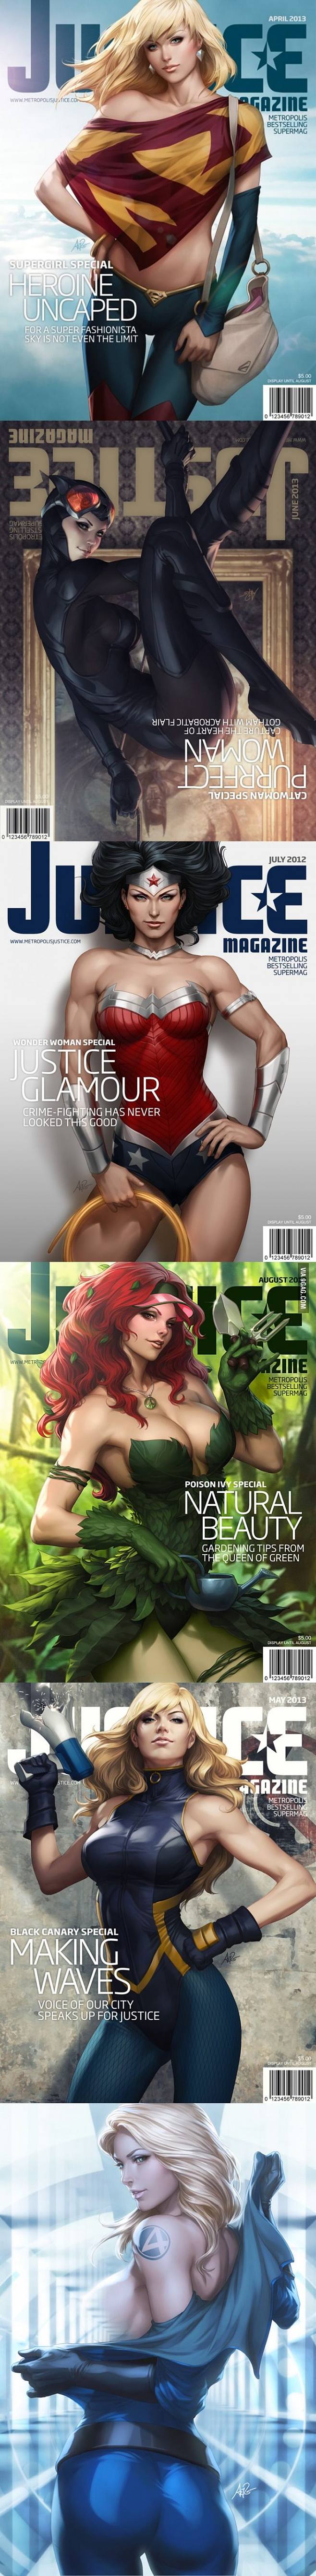 Super Cover Girls: J...